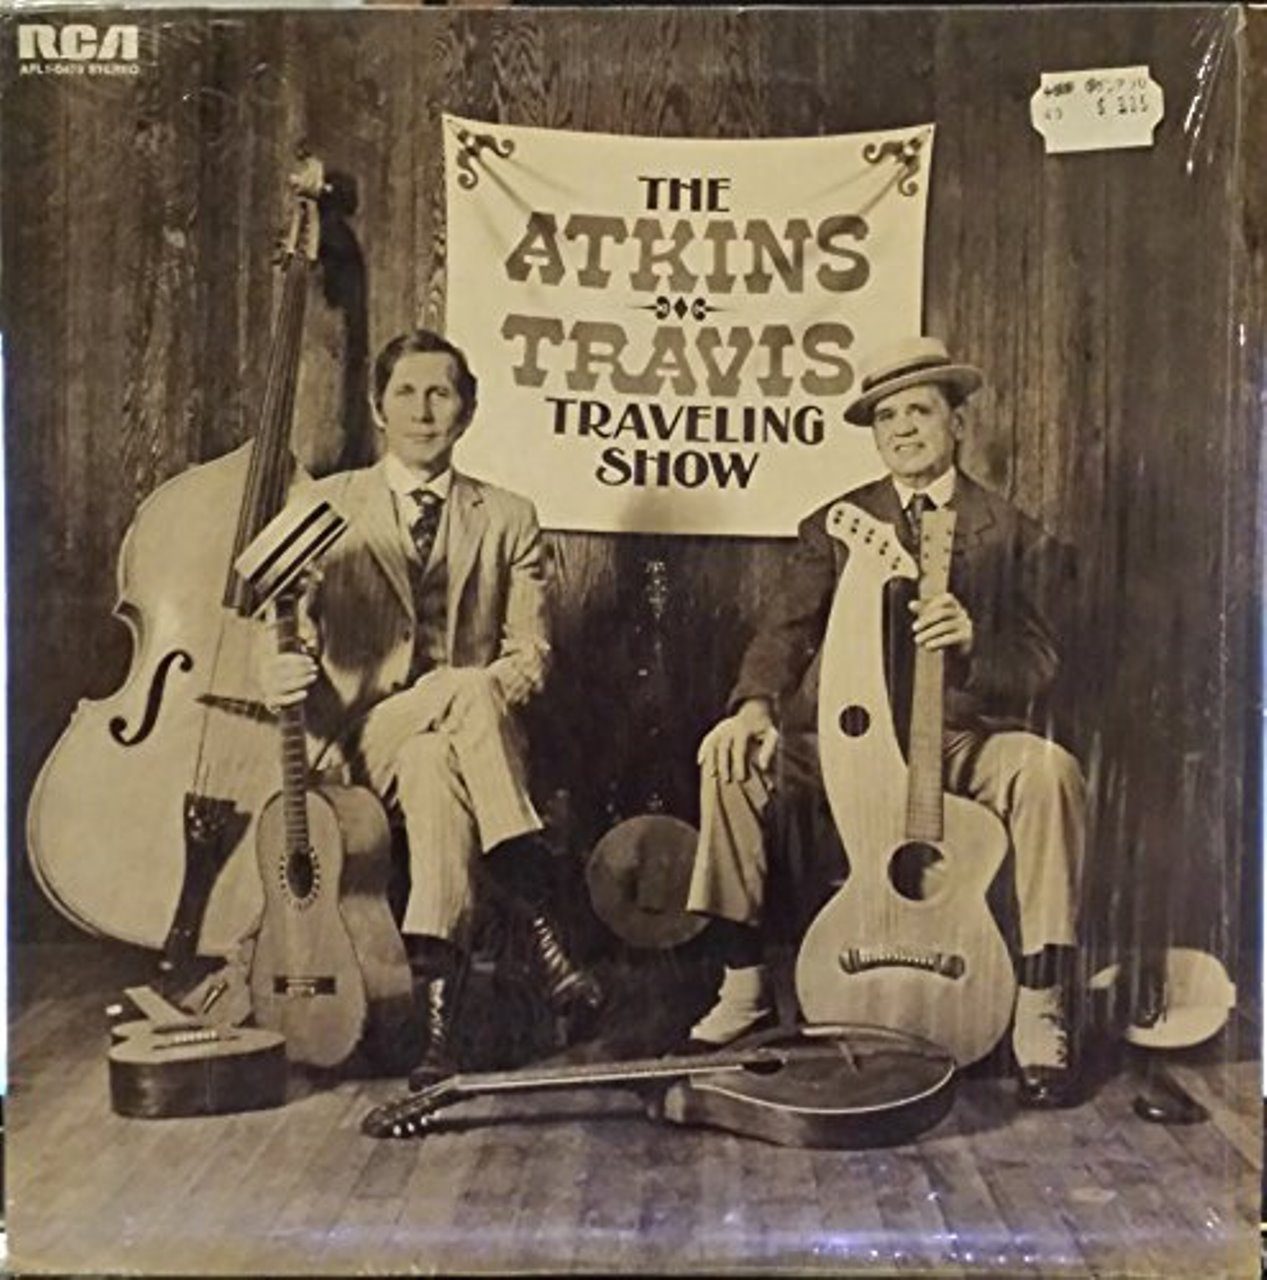 Chet Atkins & Merle Travis – Atkins-Travis Traveling Show cover album